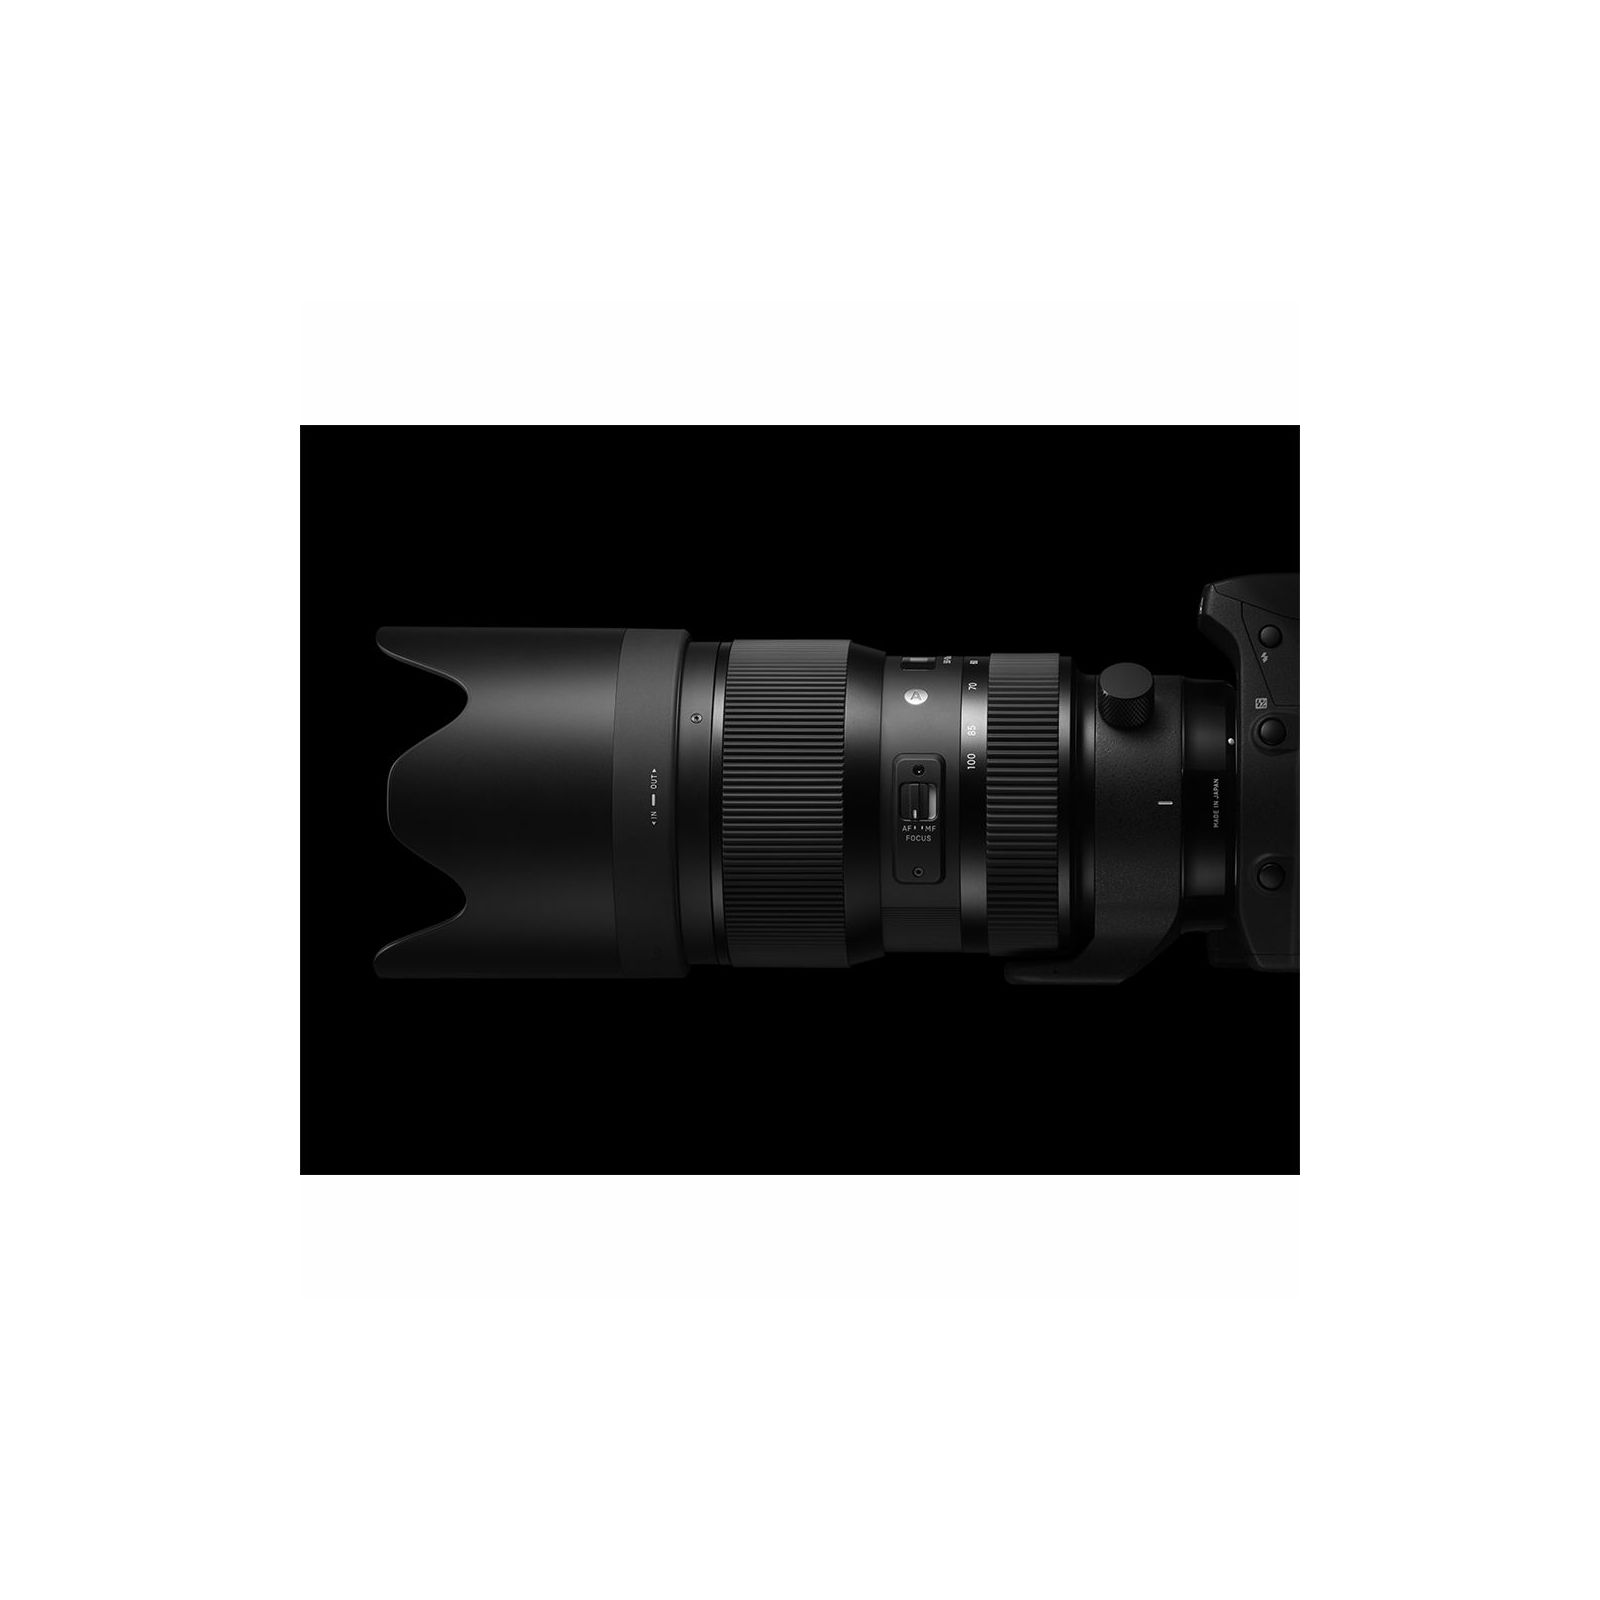 Sigma 50-100mm f/1.8 DC HSM Art Lens for Canon EF objektiv 50-100 1.8